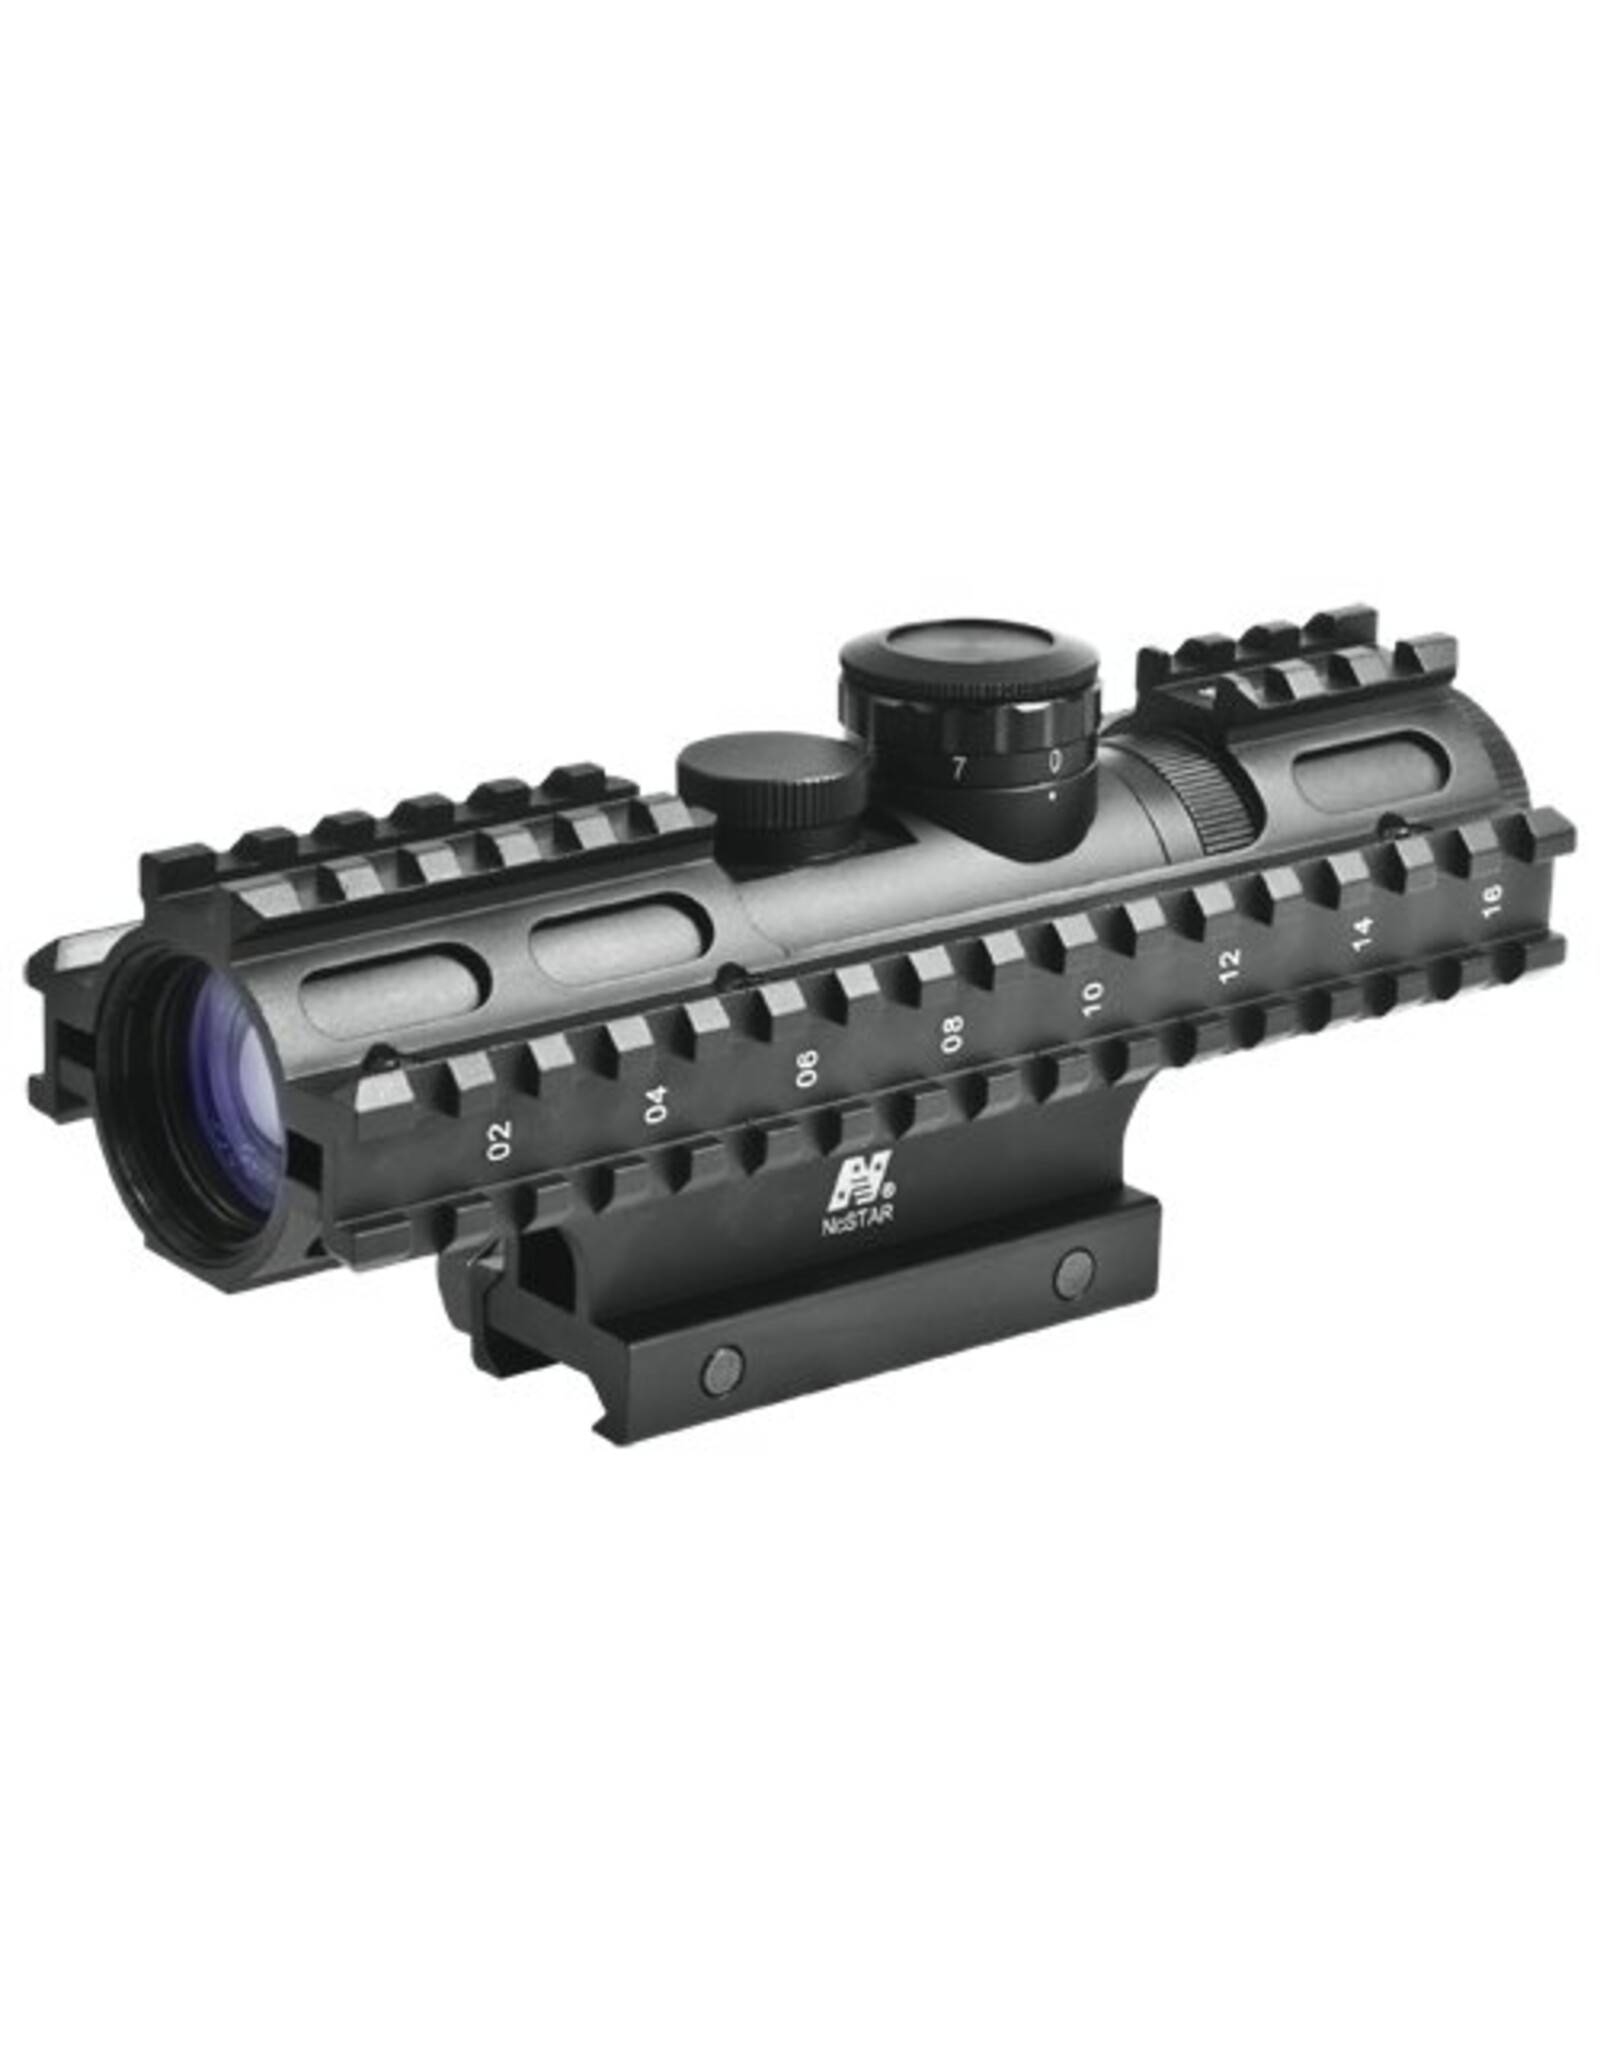 NcStar 2-7X32 compact scope/3 rail sighting system/BLUE ILLUMINATED MIL-DOT/P4 sniper/Rangefinder/green/weaver mount